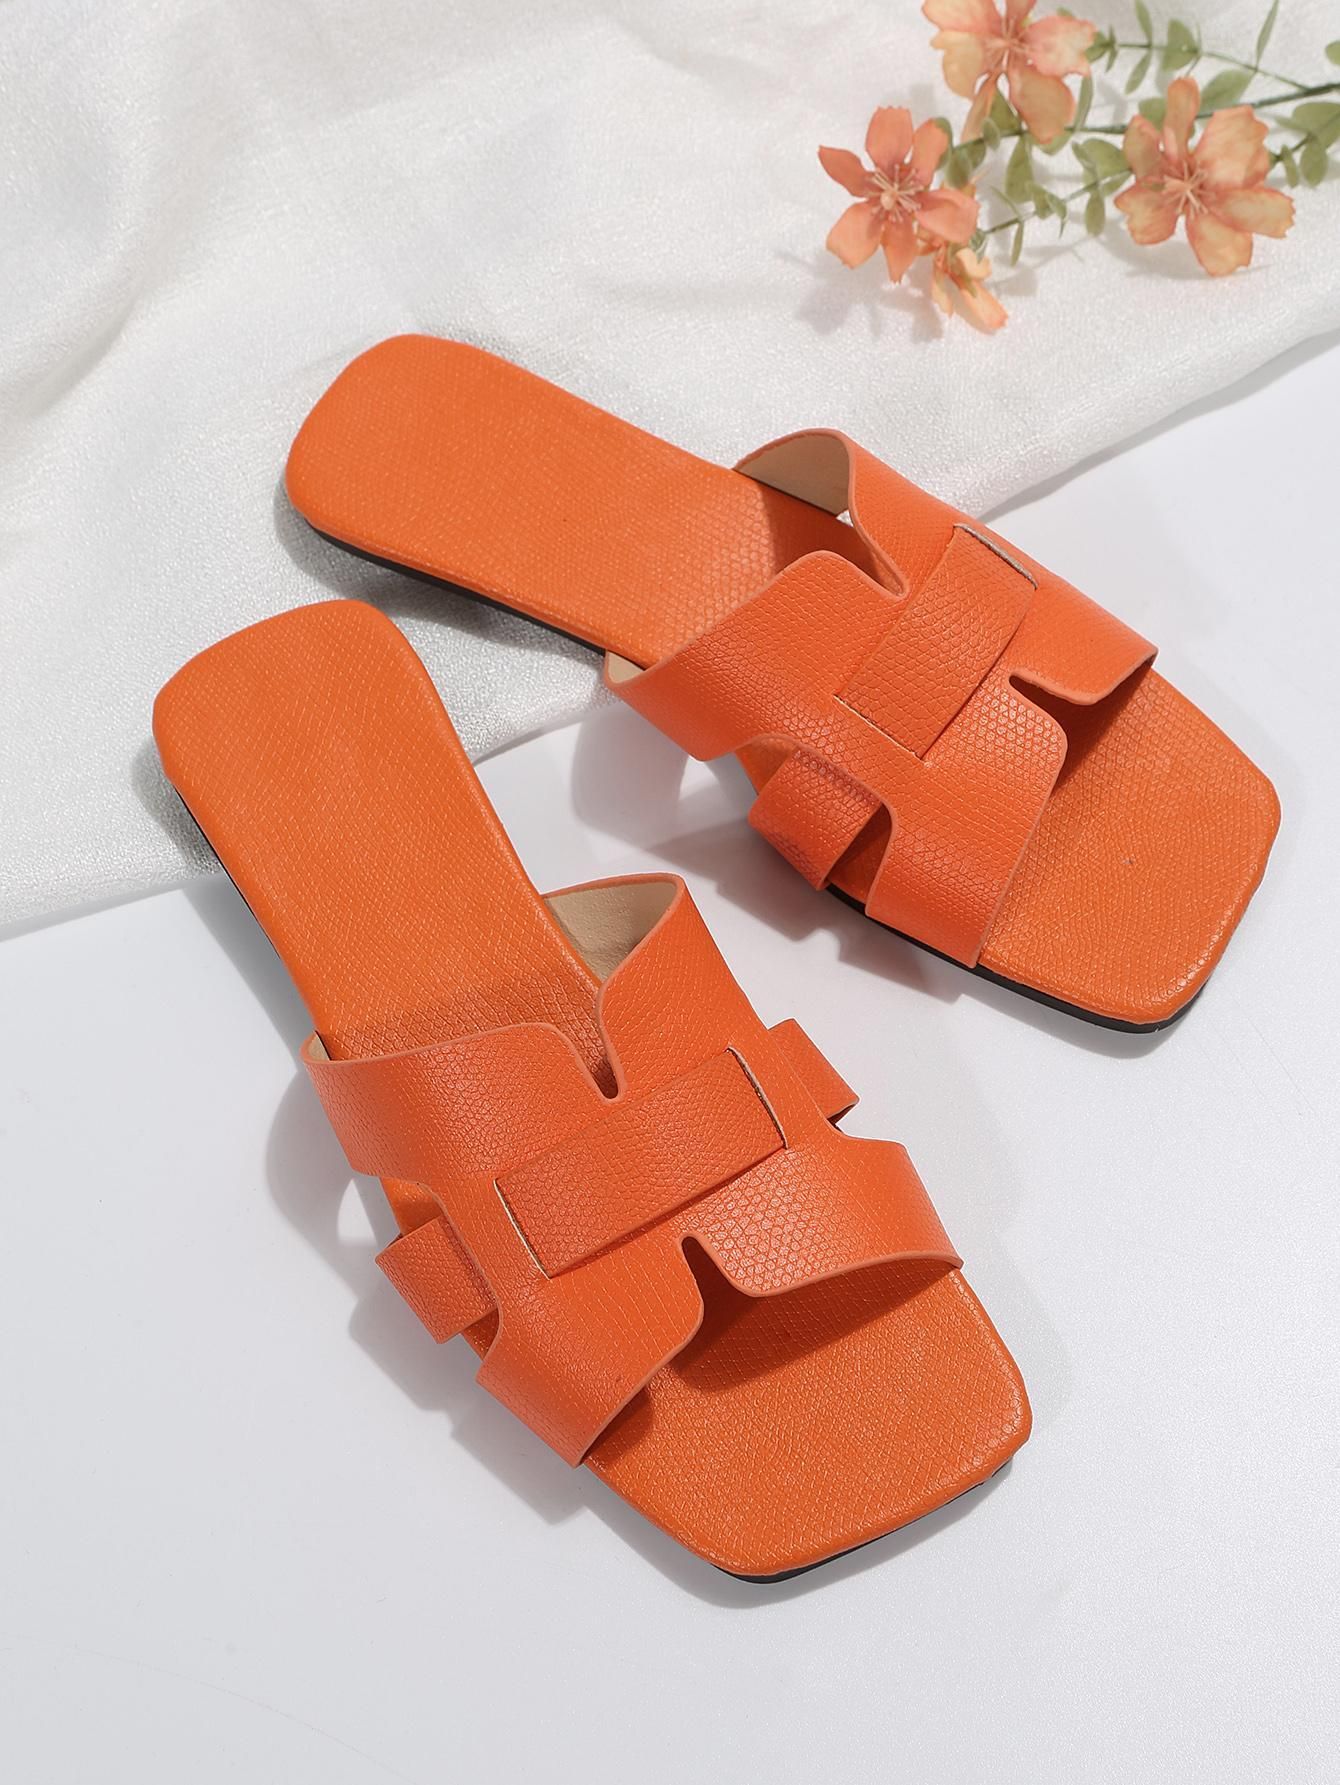 Cutout Design Fashionable Orange Slippers/sandals | SHEIN